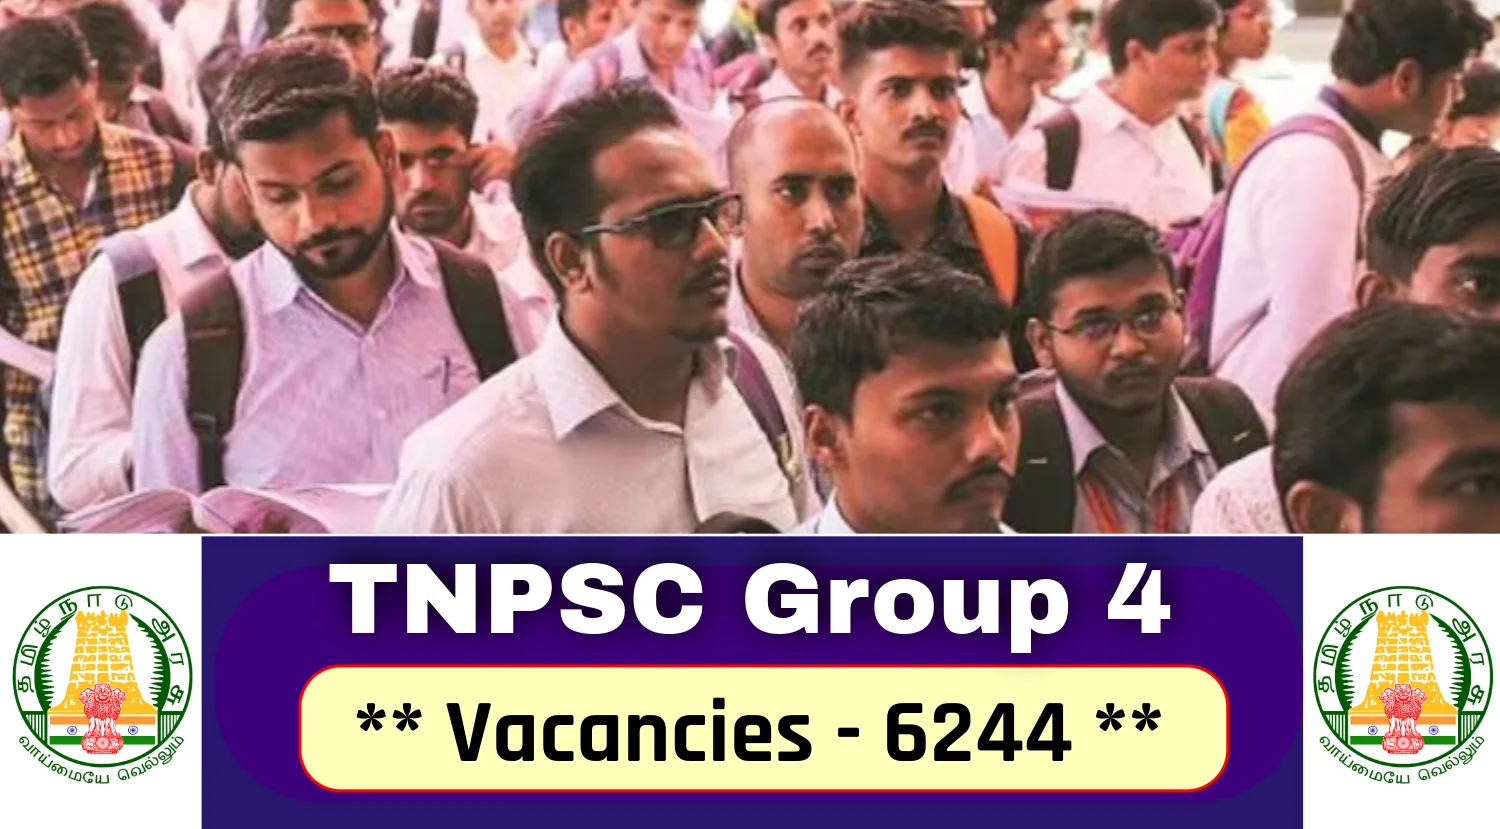 TNPSC Group 4 Services Notification 2024 Out for 6244 Vacancies, Check TNPSC Assistant, Typist, Clerk, Forest Gourd Recruitment Details Now